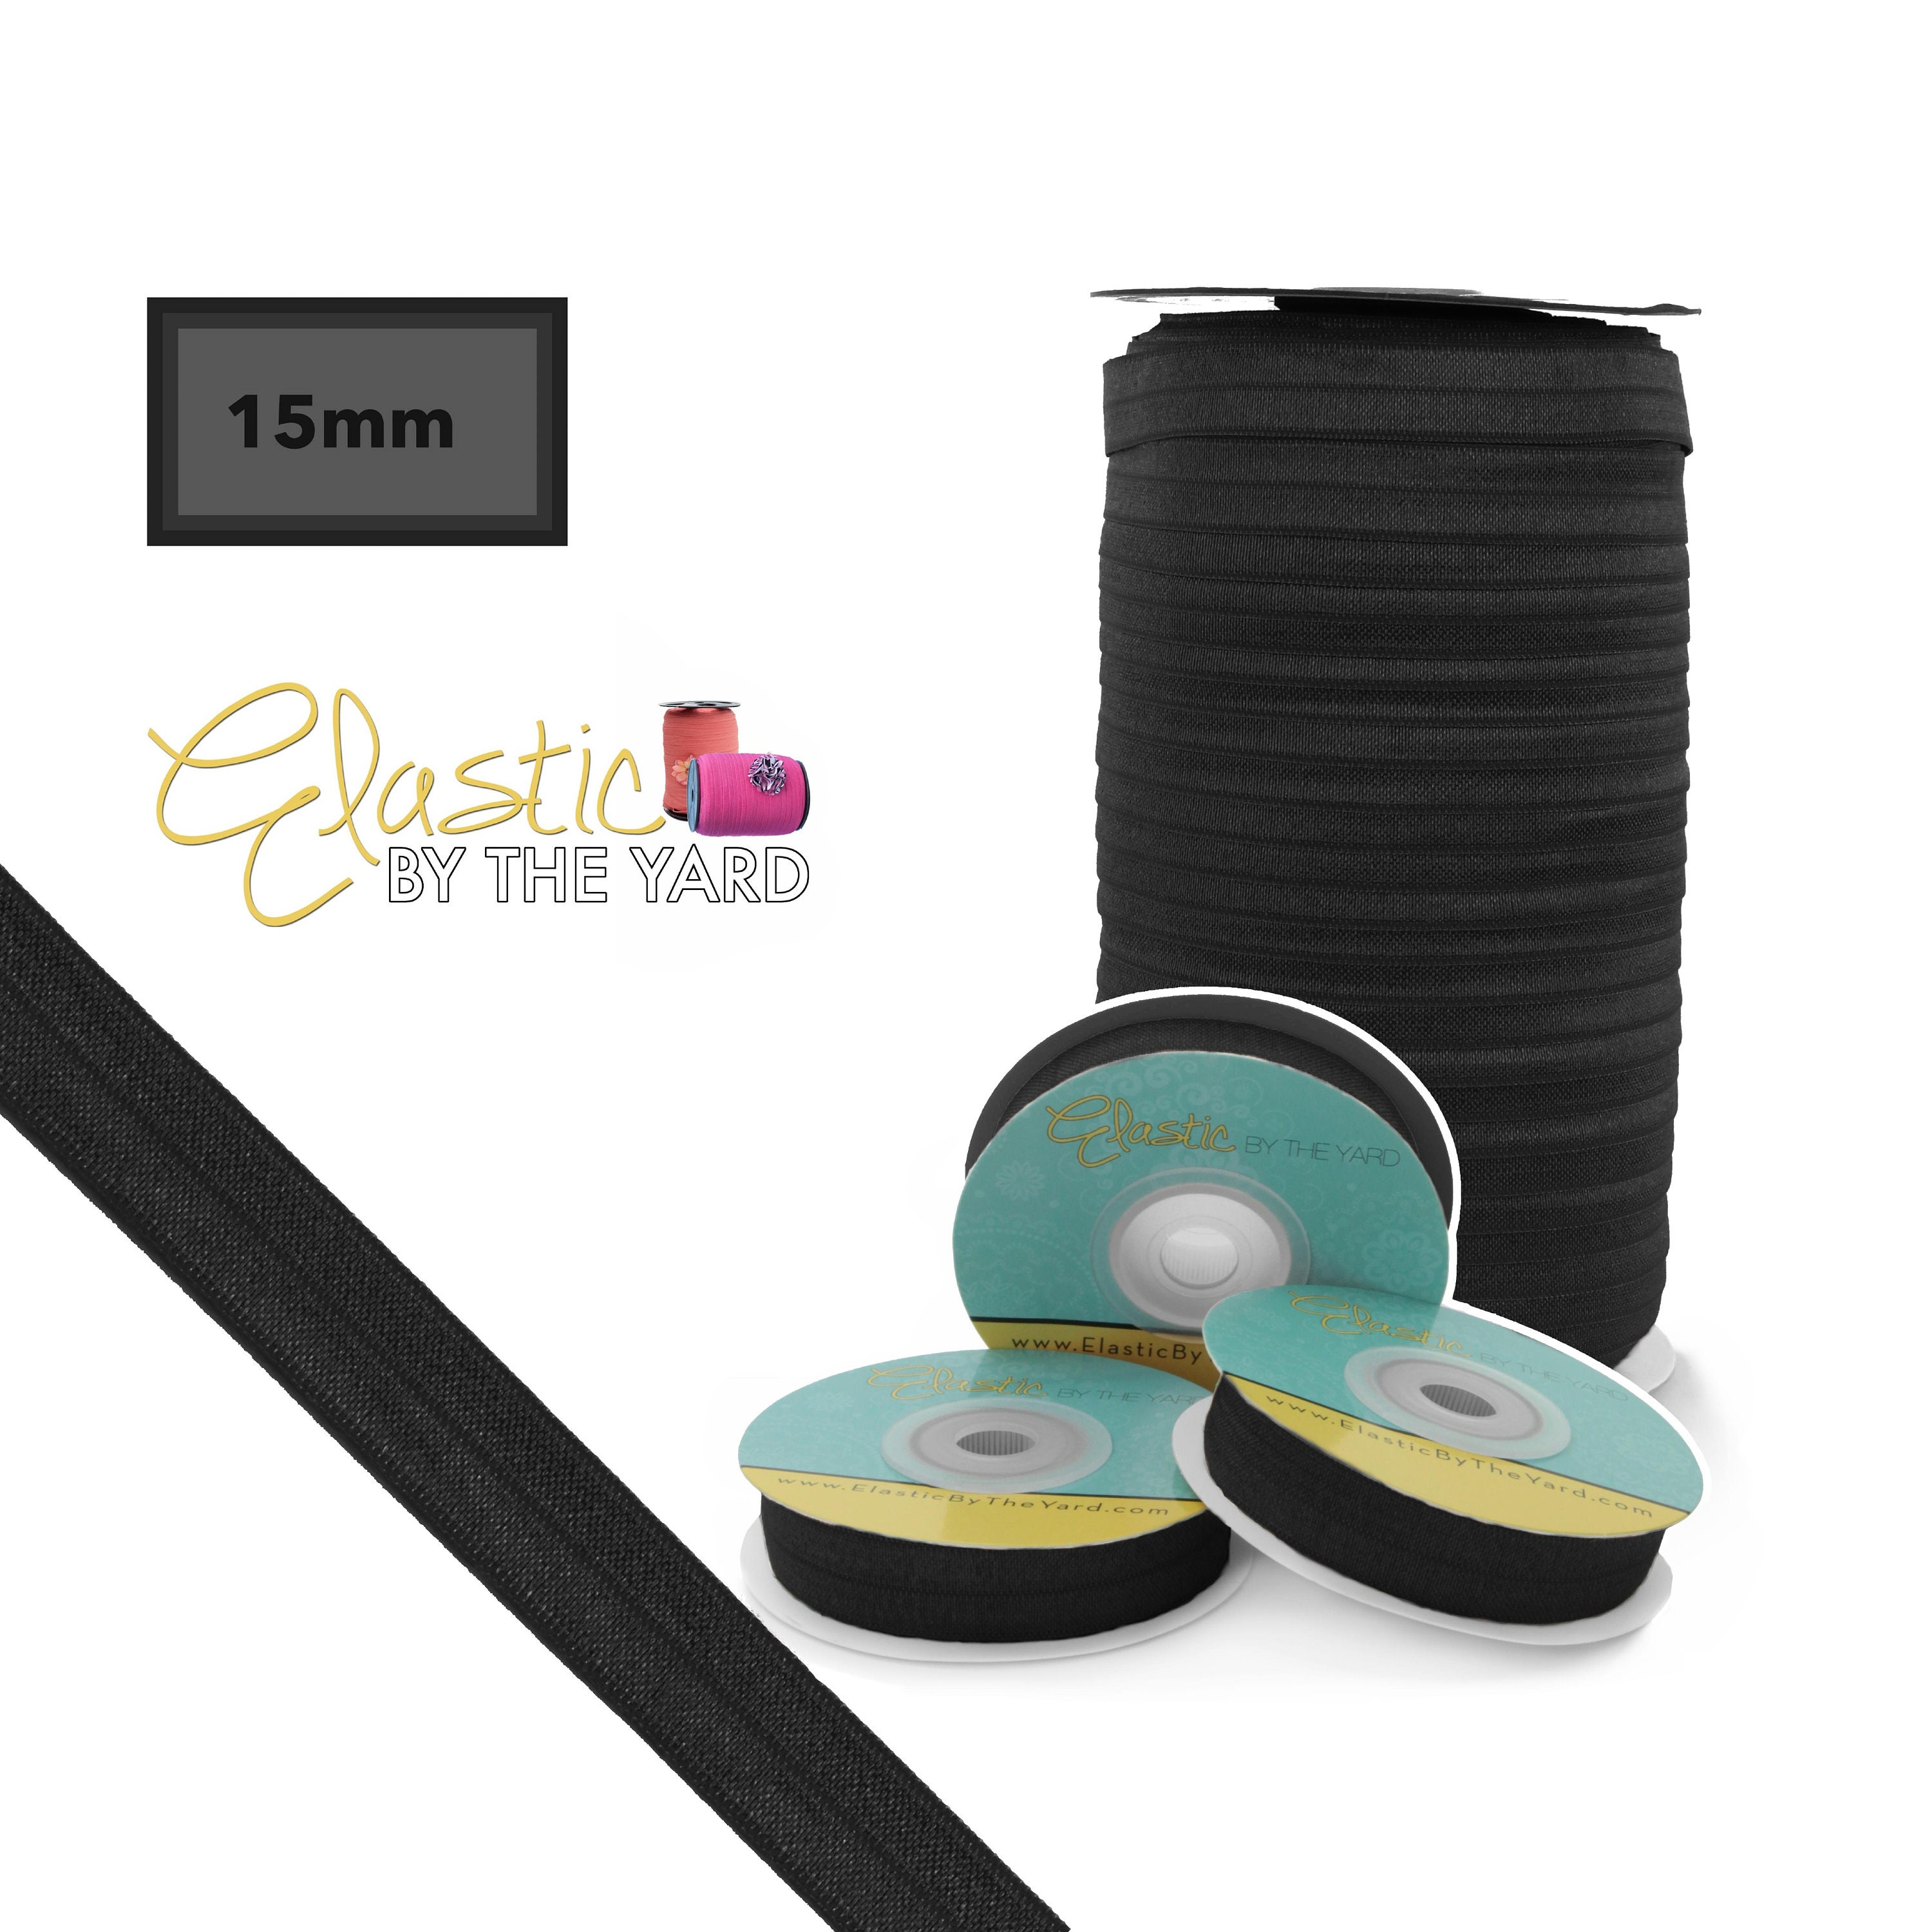 Sewing Elastic 1 Inch X 10 Yard Elastic Band Loose Packaging Made in USA  Black 